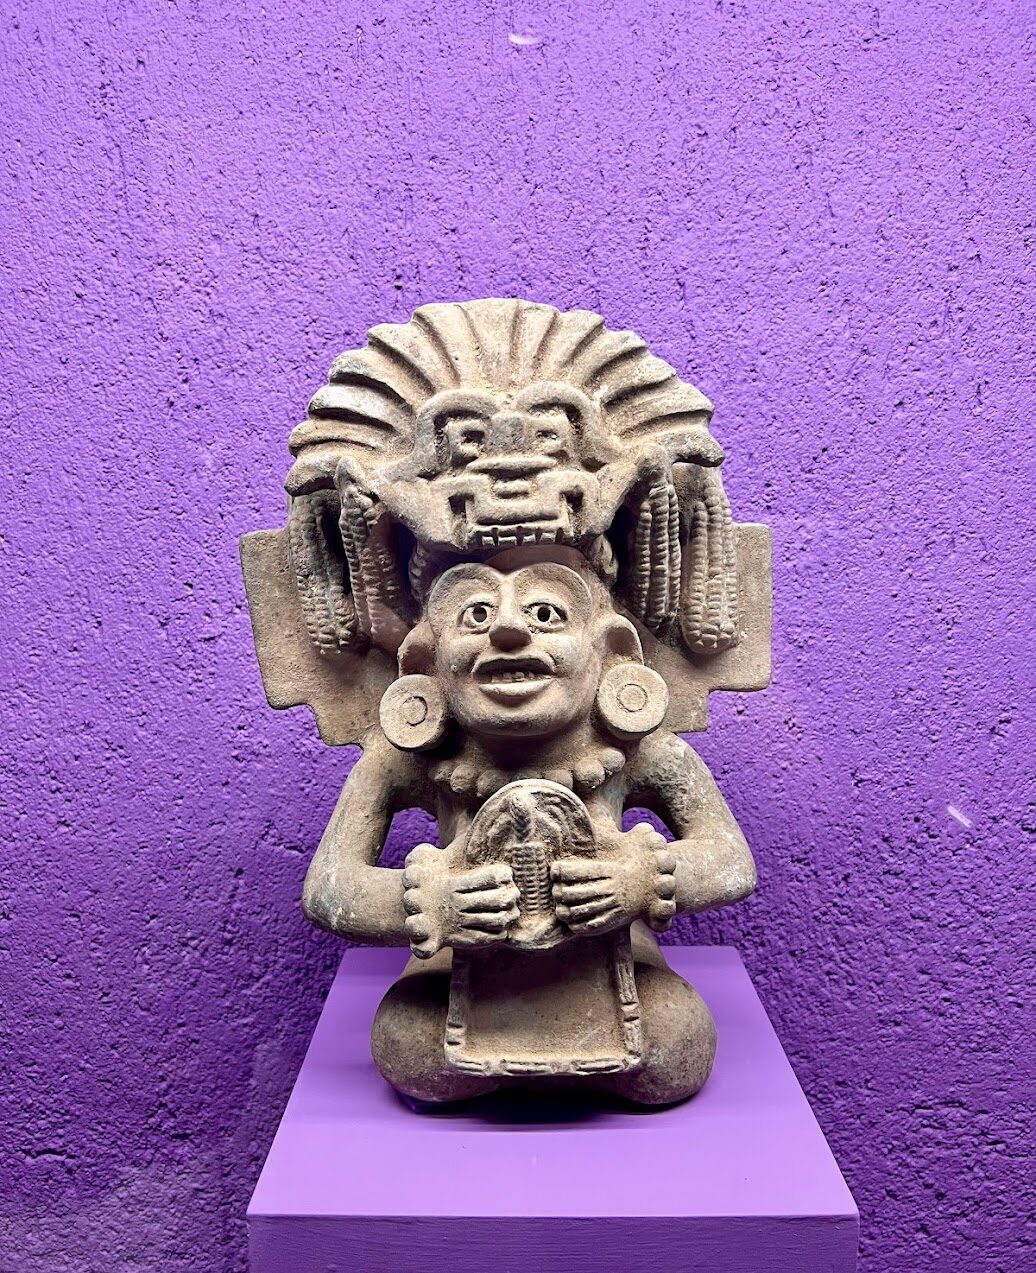 Museo de Arte Prehispánico de México Rufino Tamayo Oaxaca City Mexico museum top sight art archeology